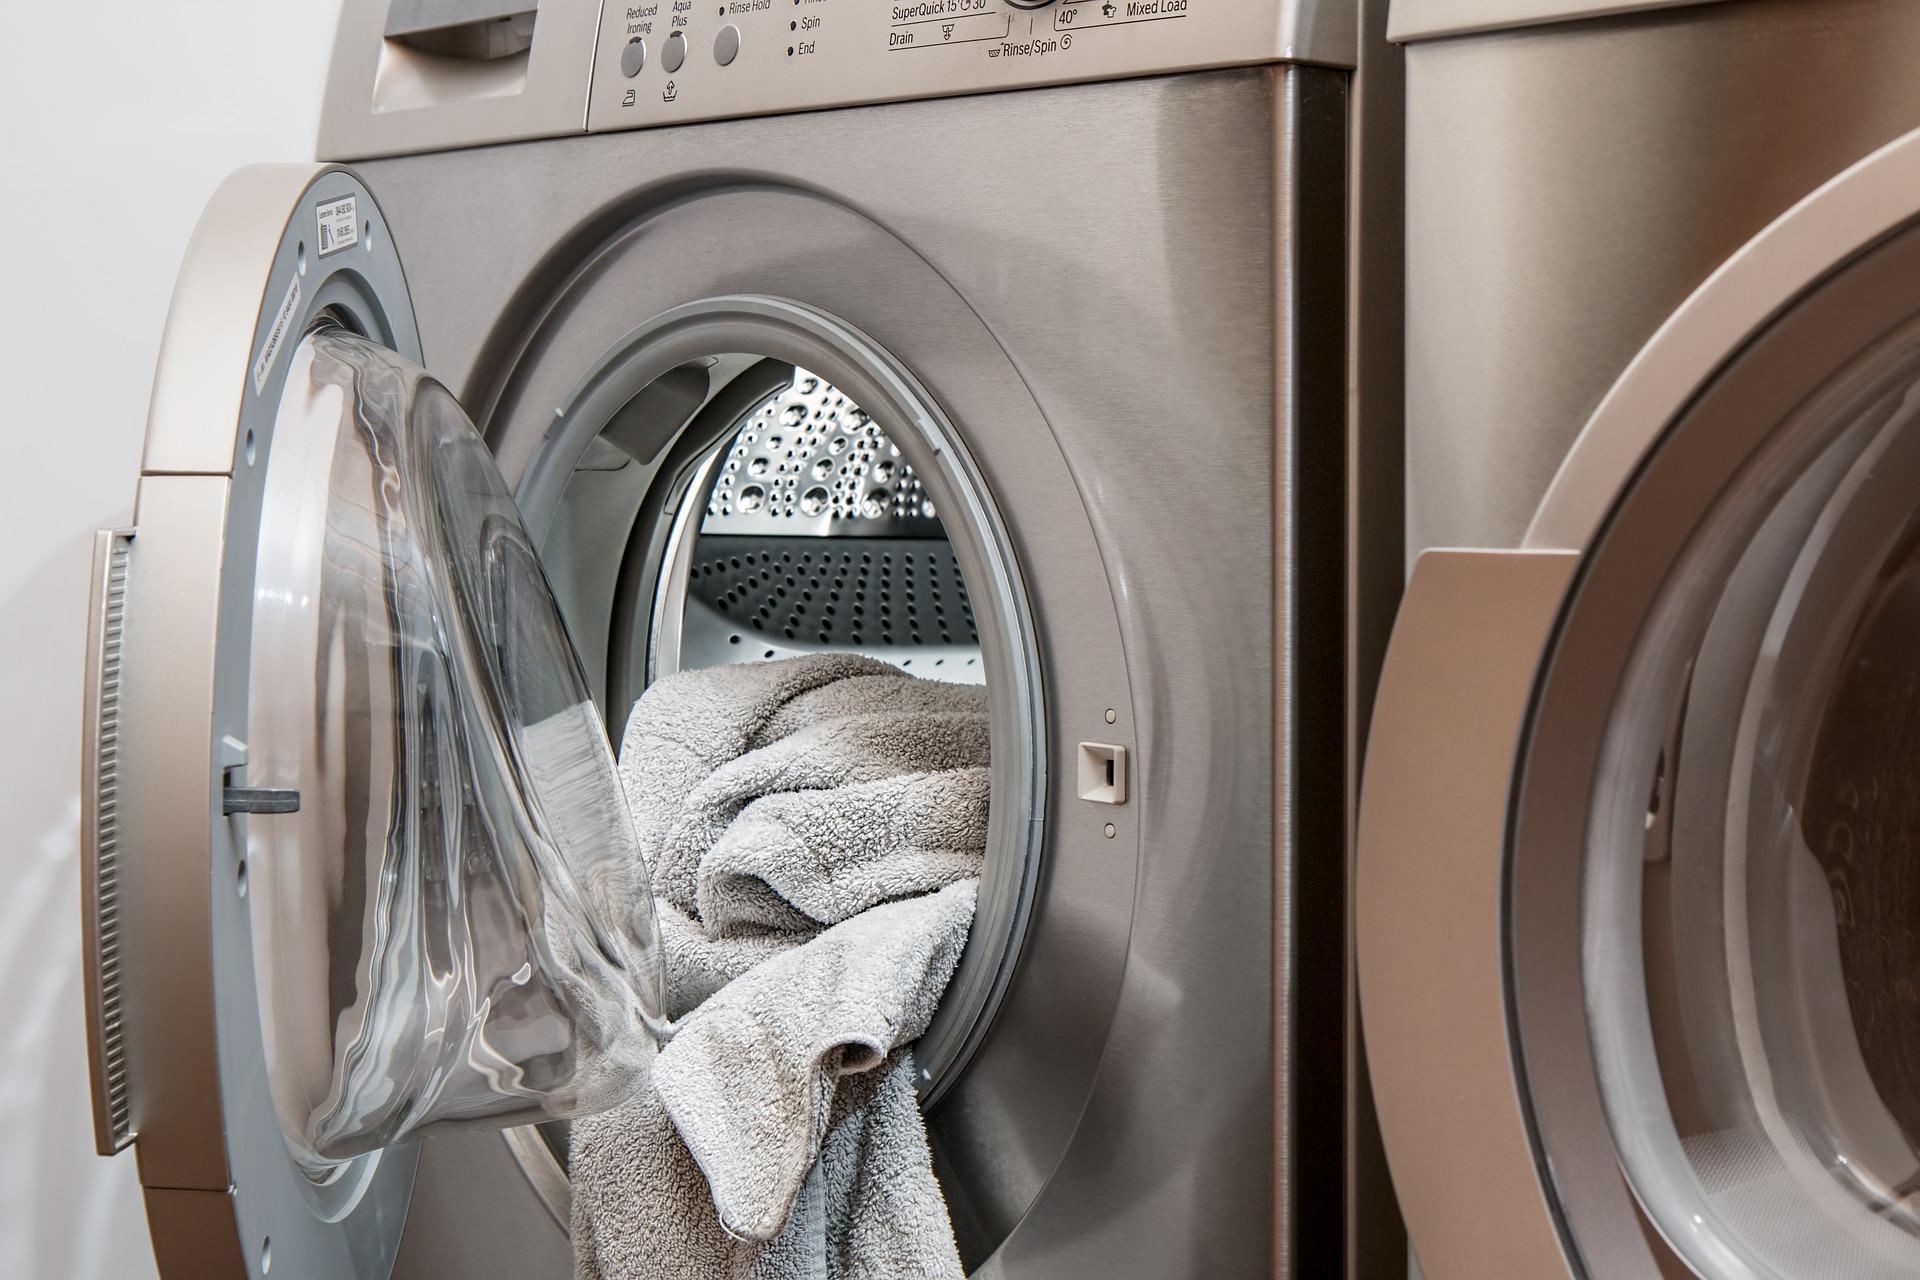 Llenar la lavadora al completo es un truco para ahorrar en la factura del agua. Pixabay